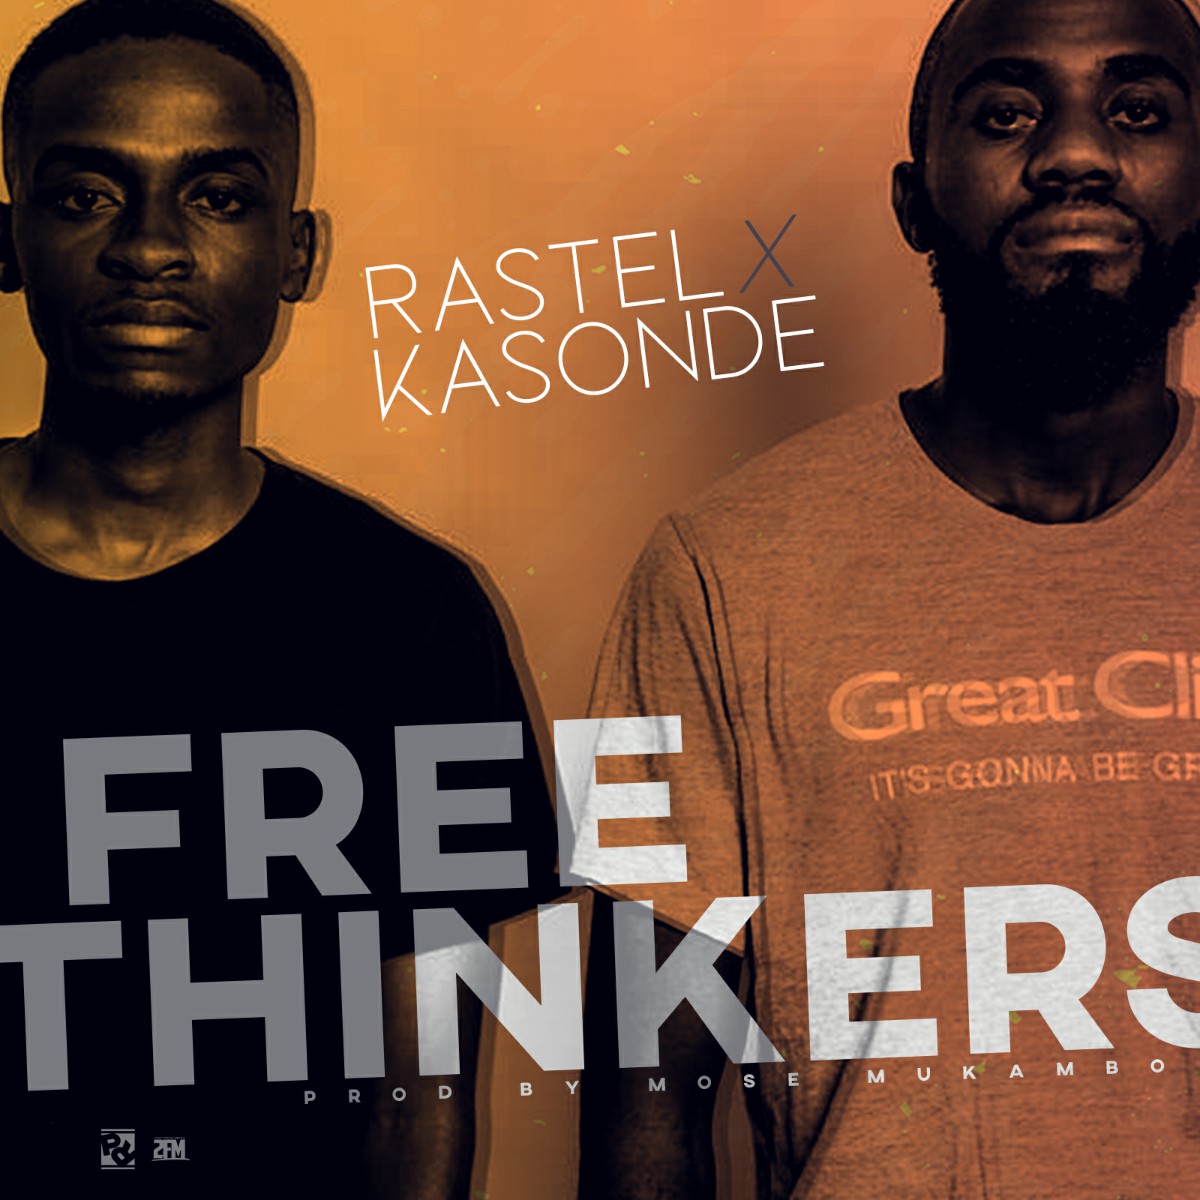 Rastel x Kasonde - Free Thinkers (Prod. Mose Mukambo)